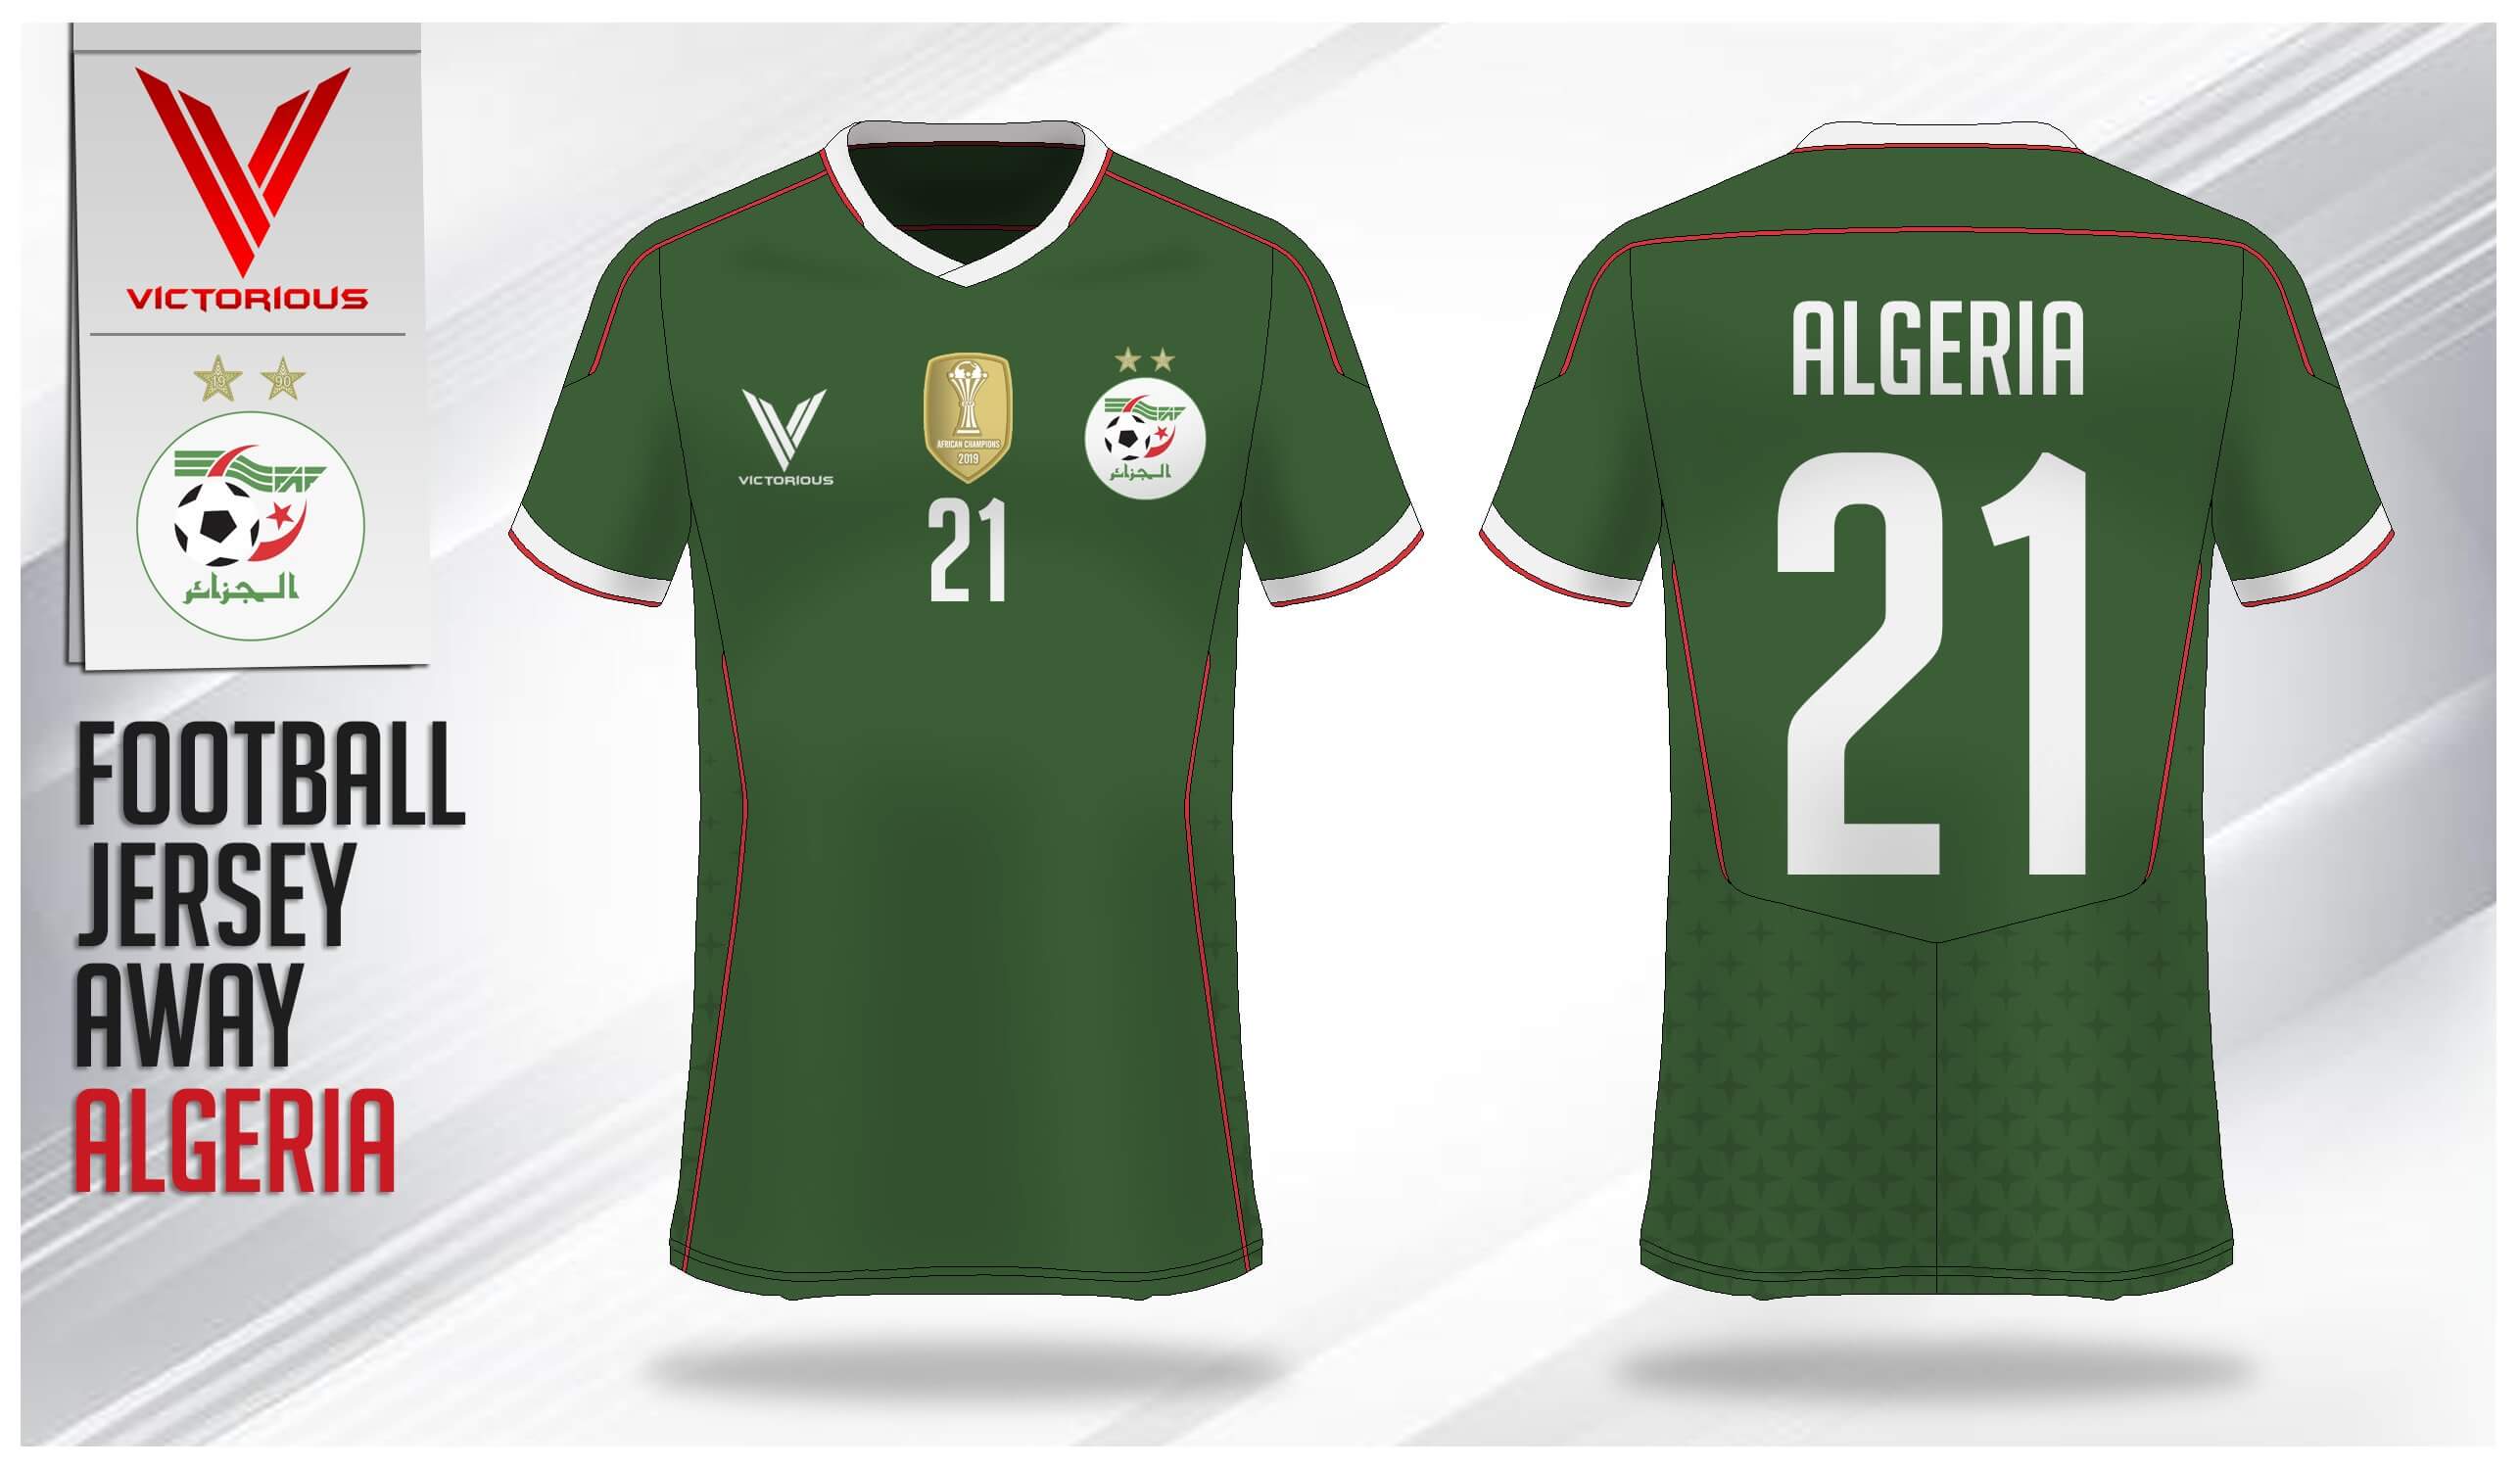 2020 Algeria home jersey